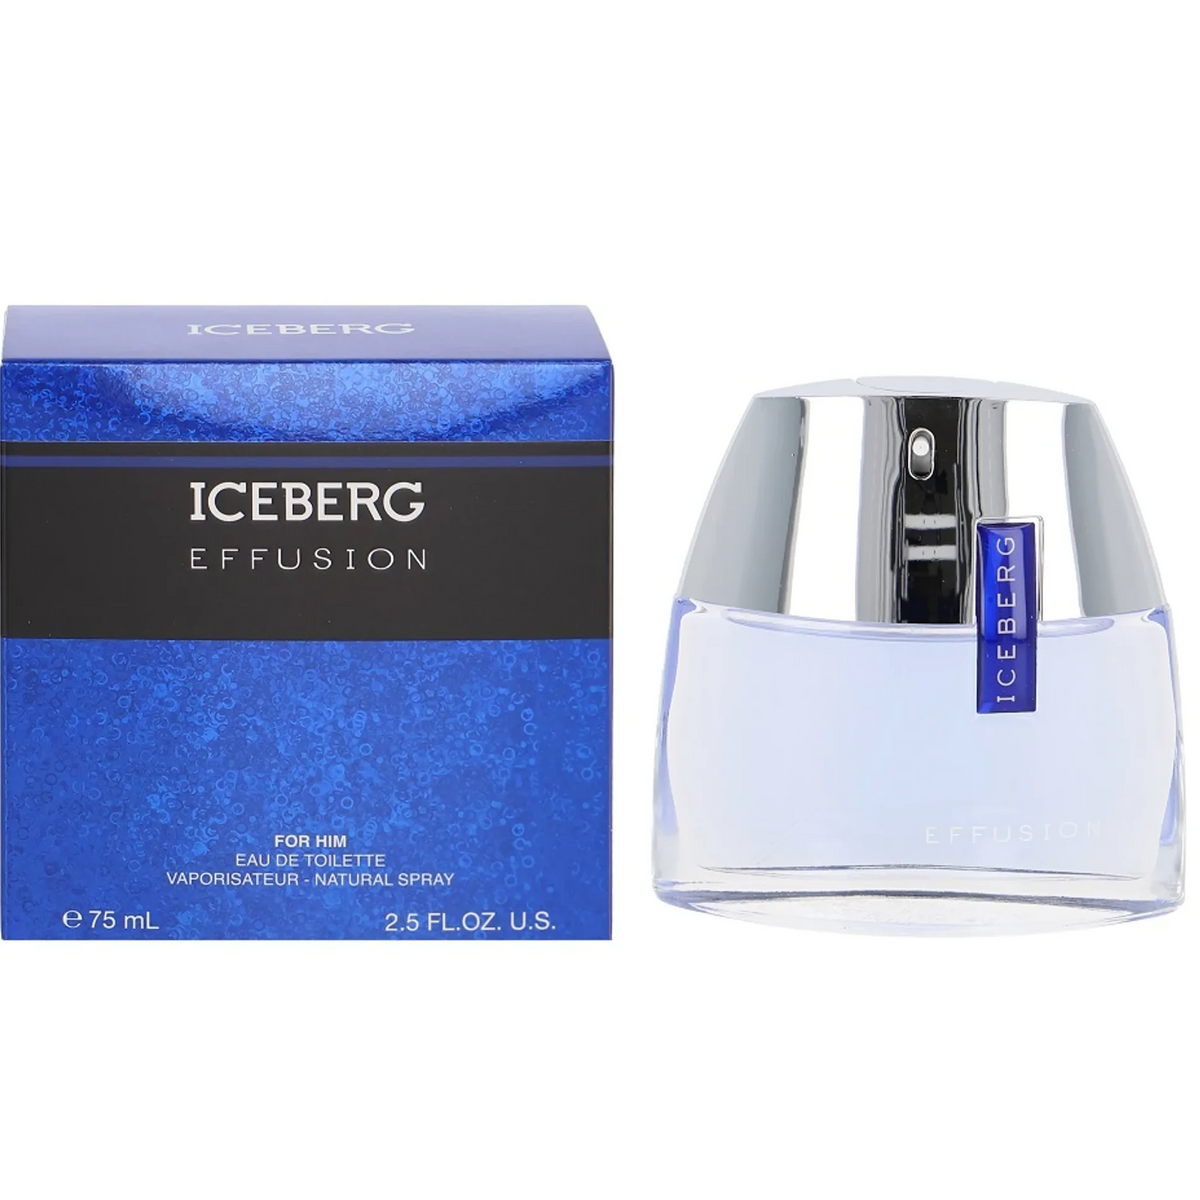 perfumes Men samawa For Effusion 75ml EDT – Iceberg For Perfume Him